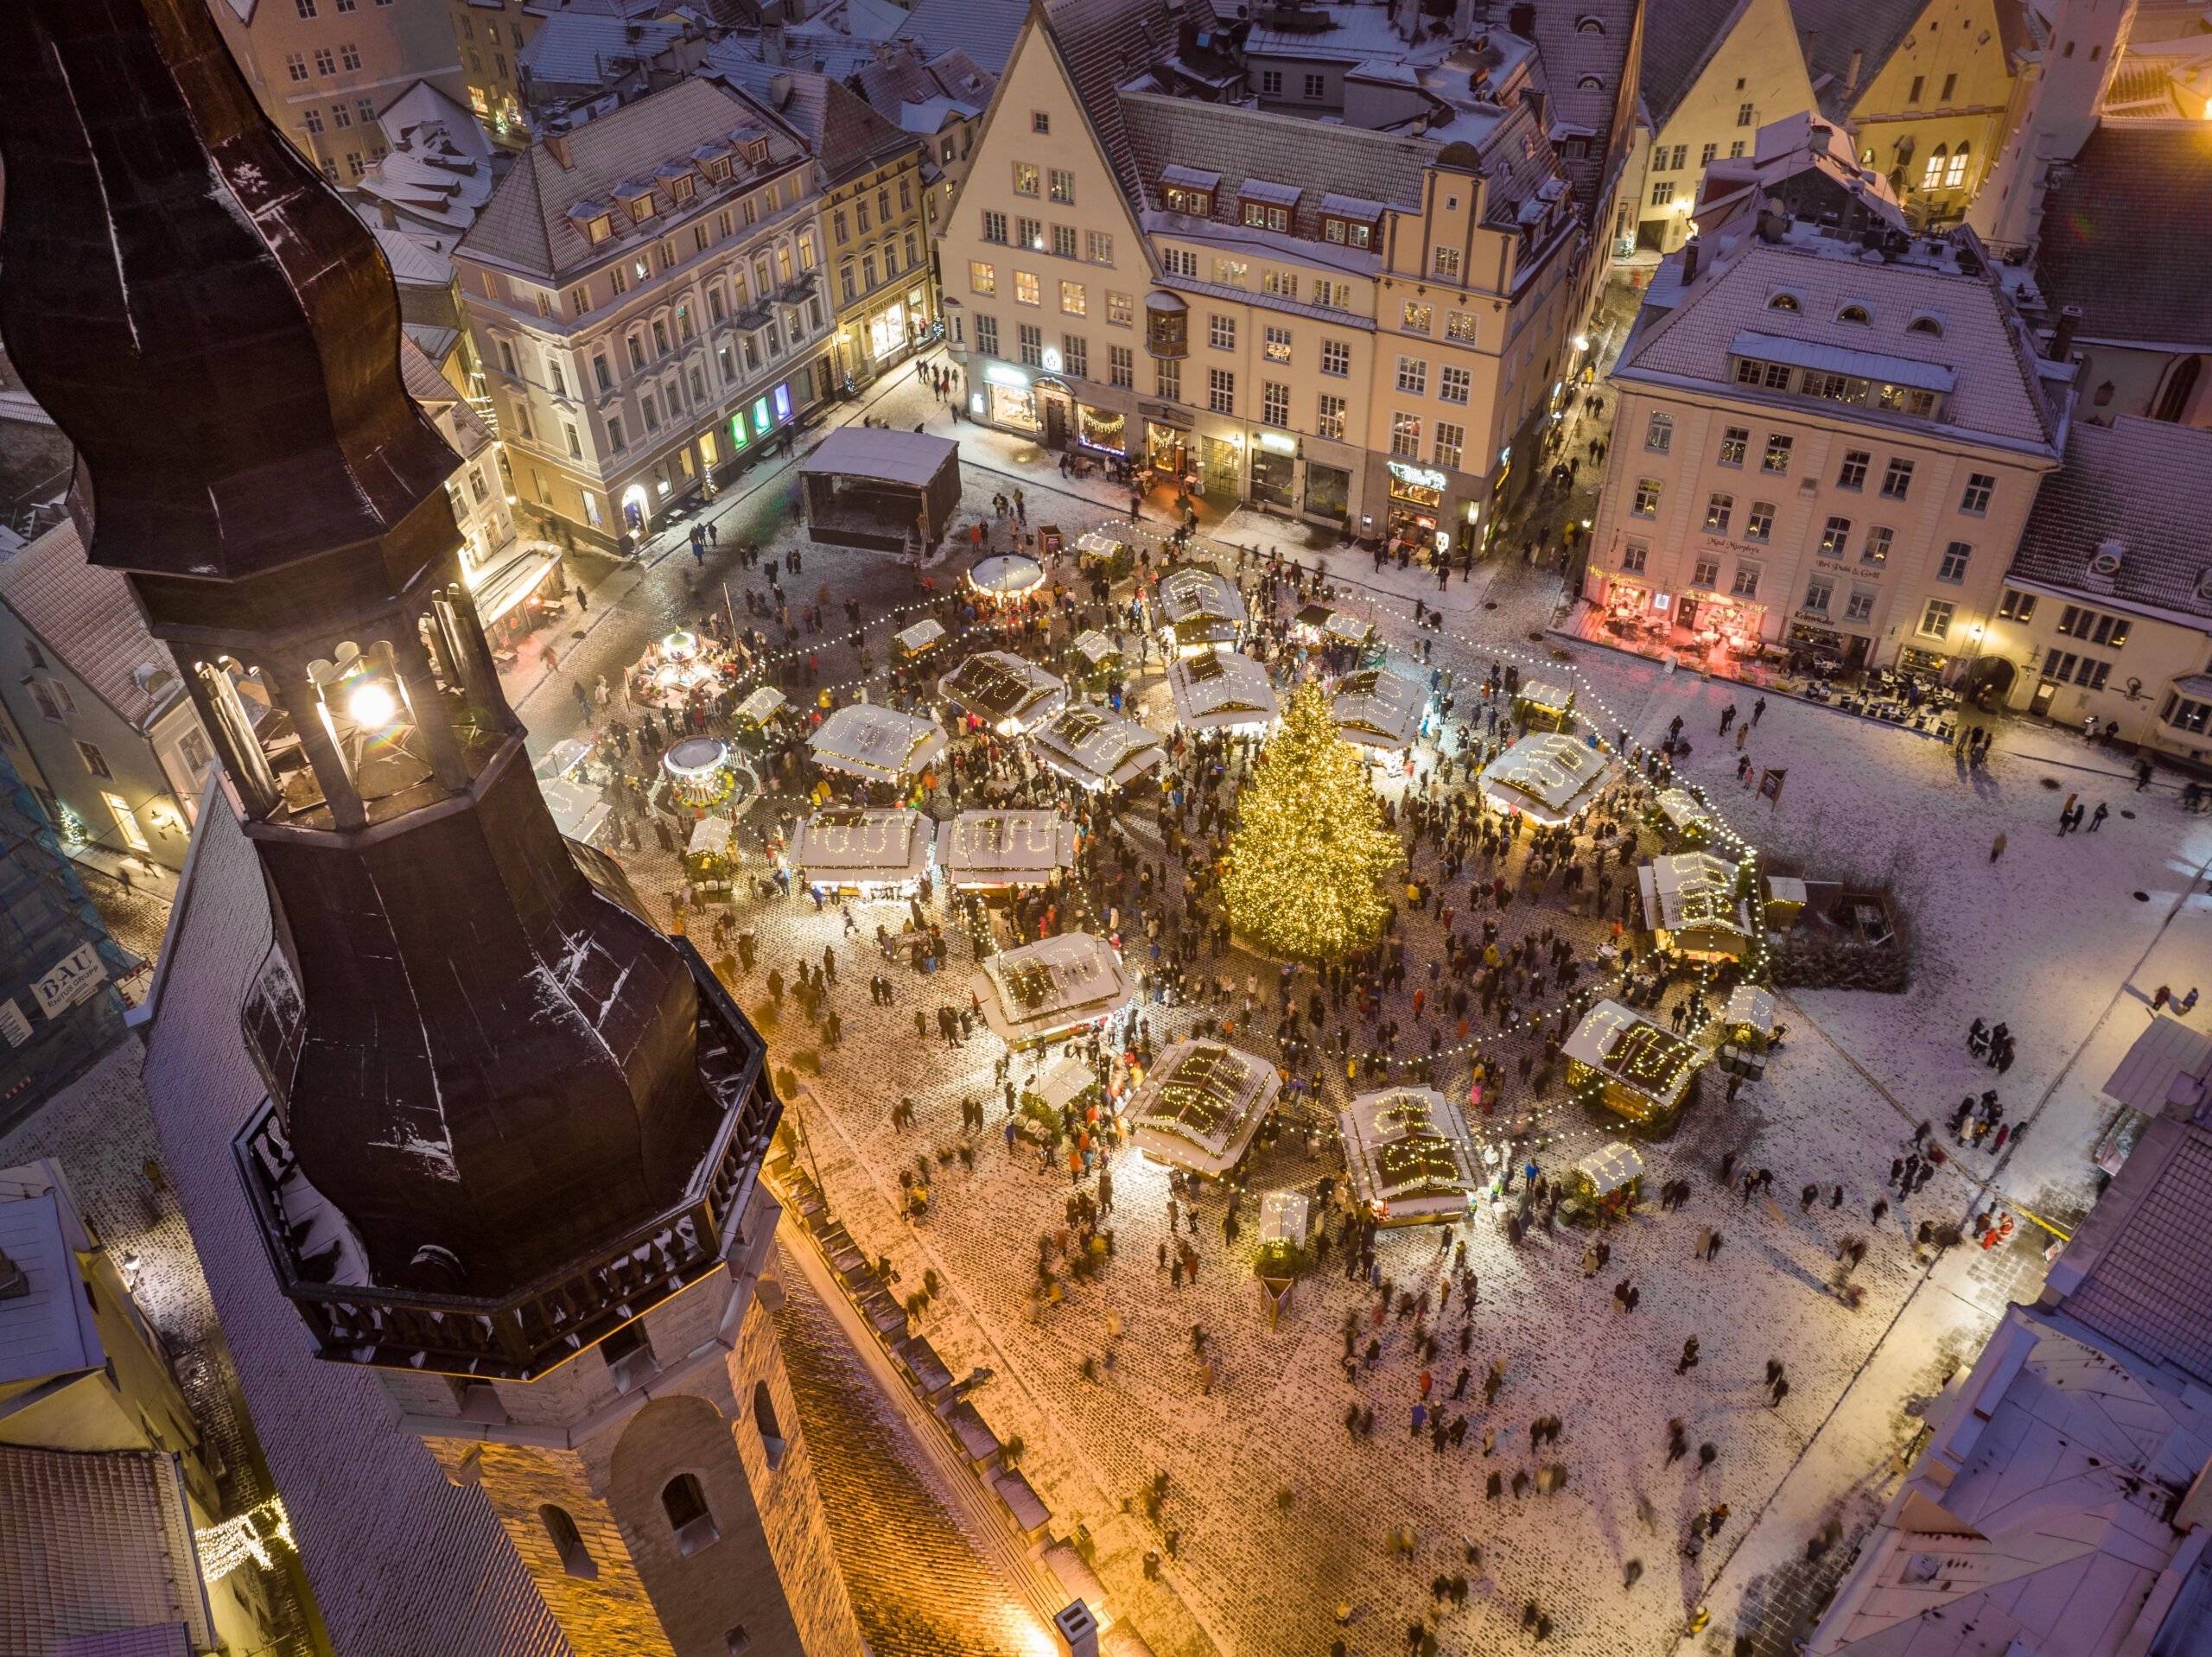 Benvenuti a Tallinn, la capitale medievale